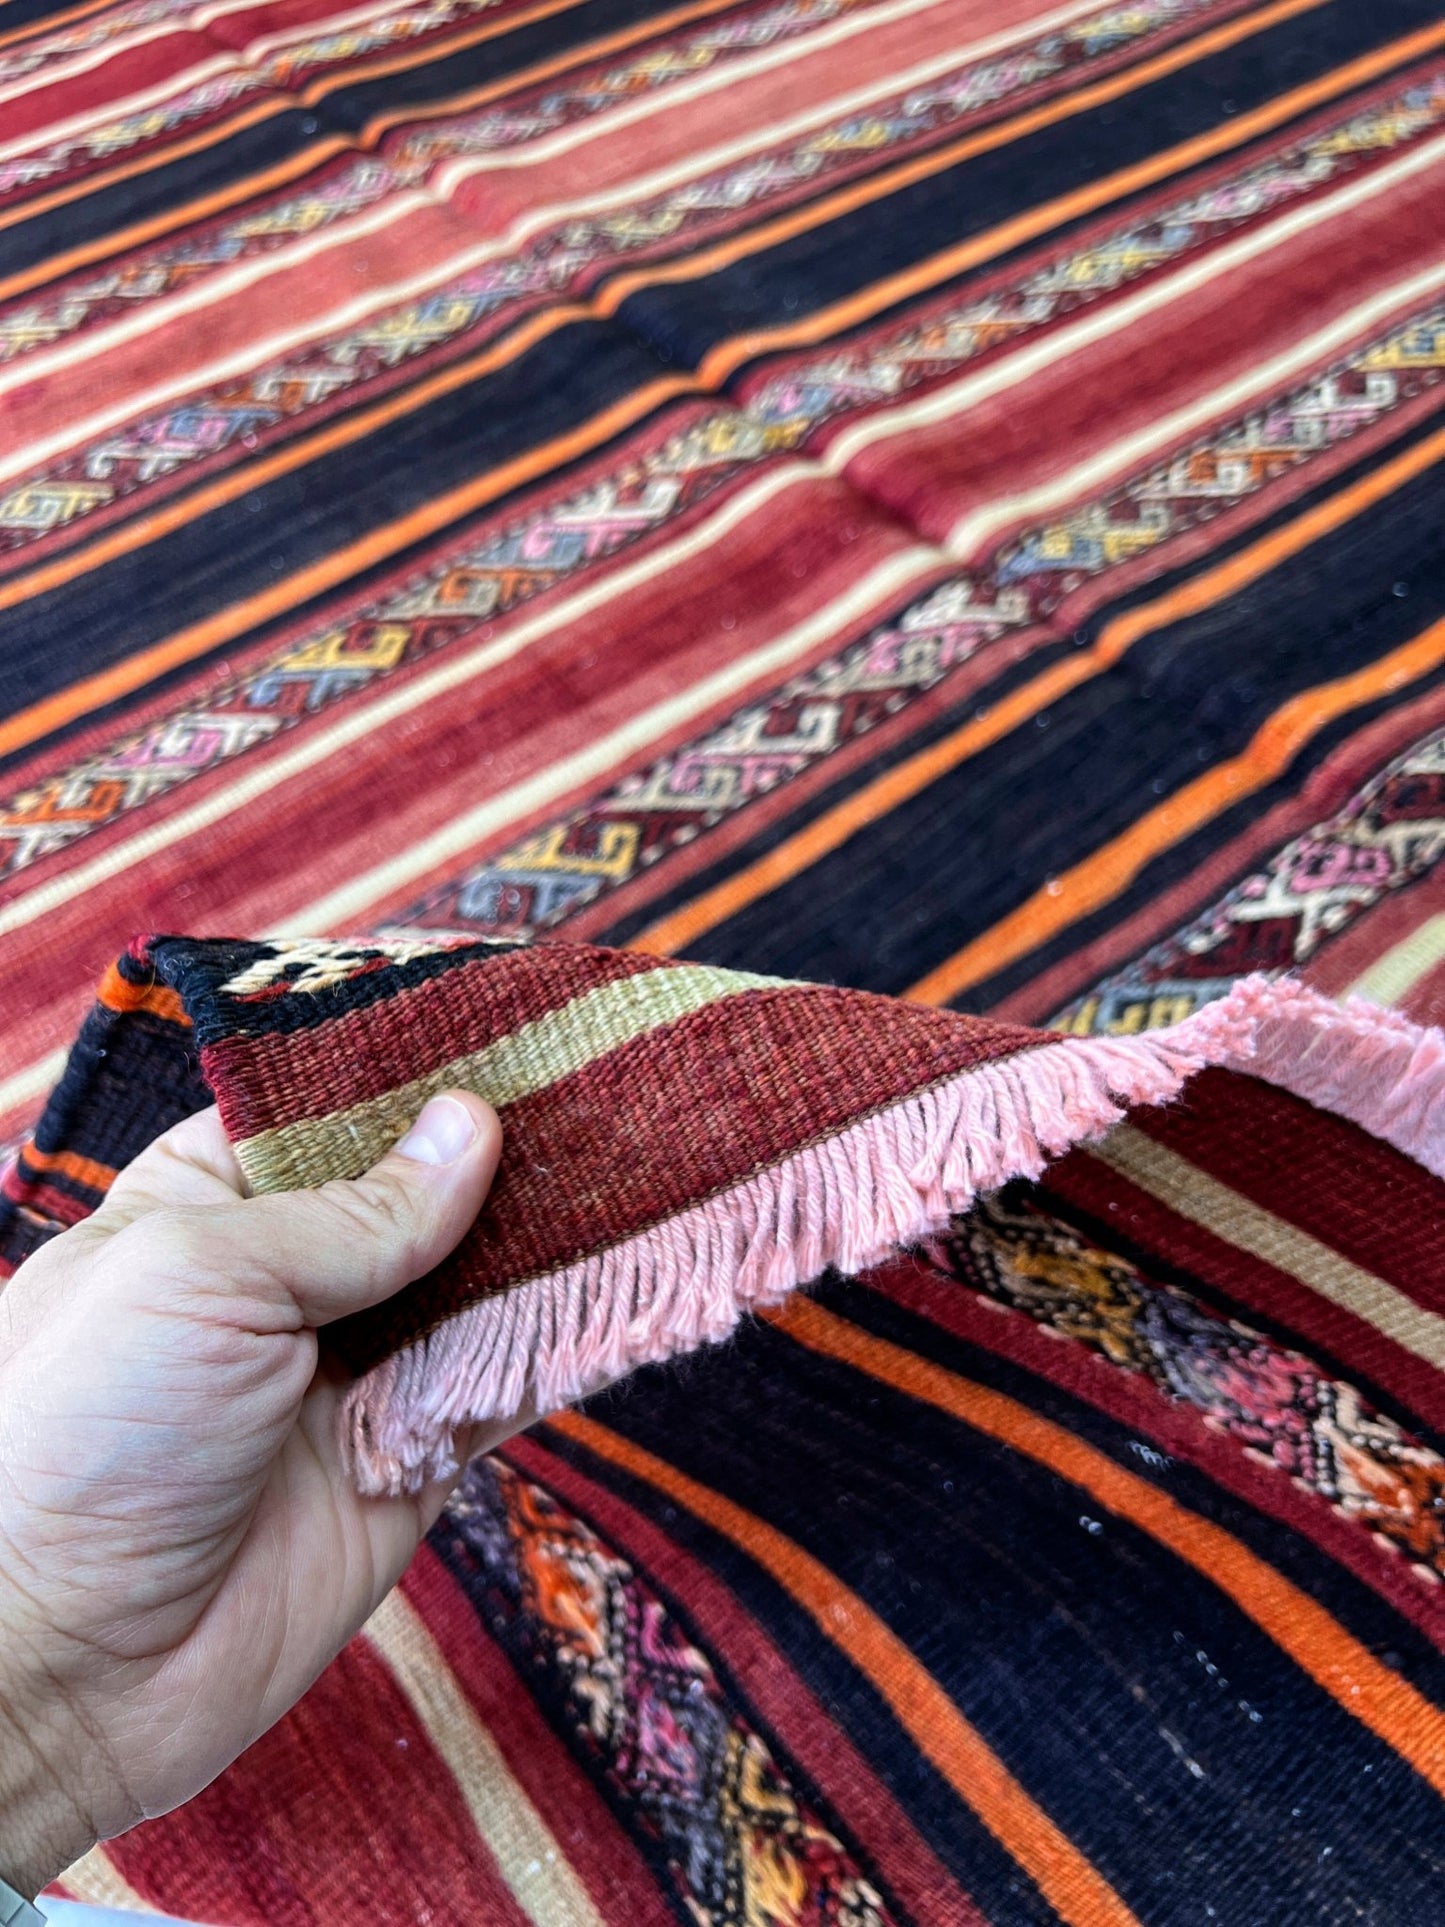 oriental rugs berkeley Turkish Sivas kilim rug shop an francisco bay area berkeley buy rug online california